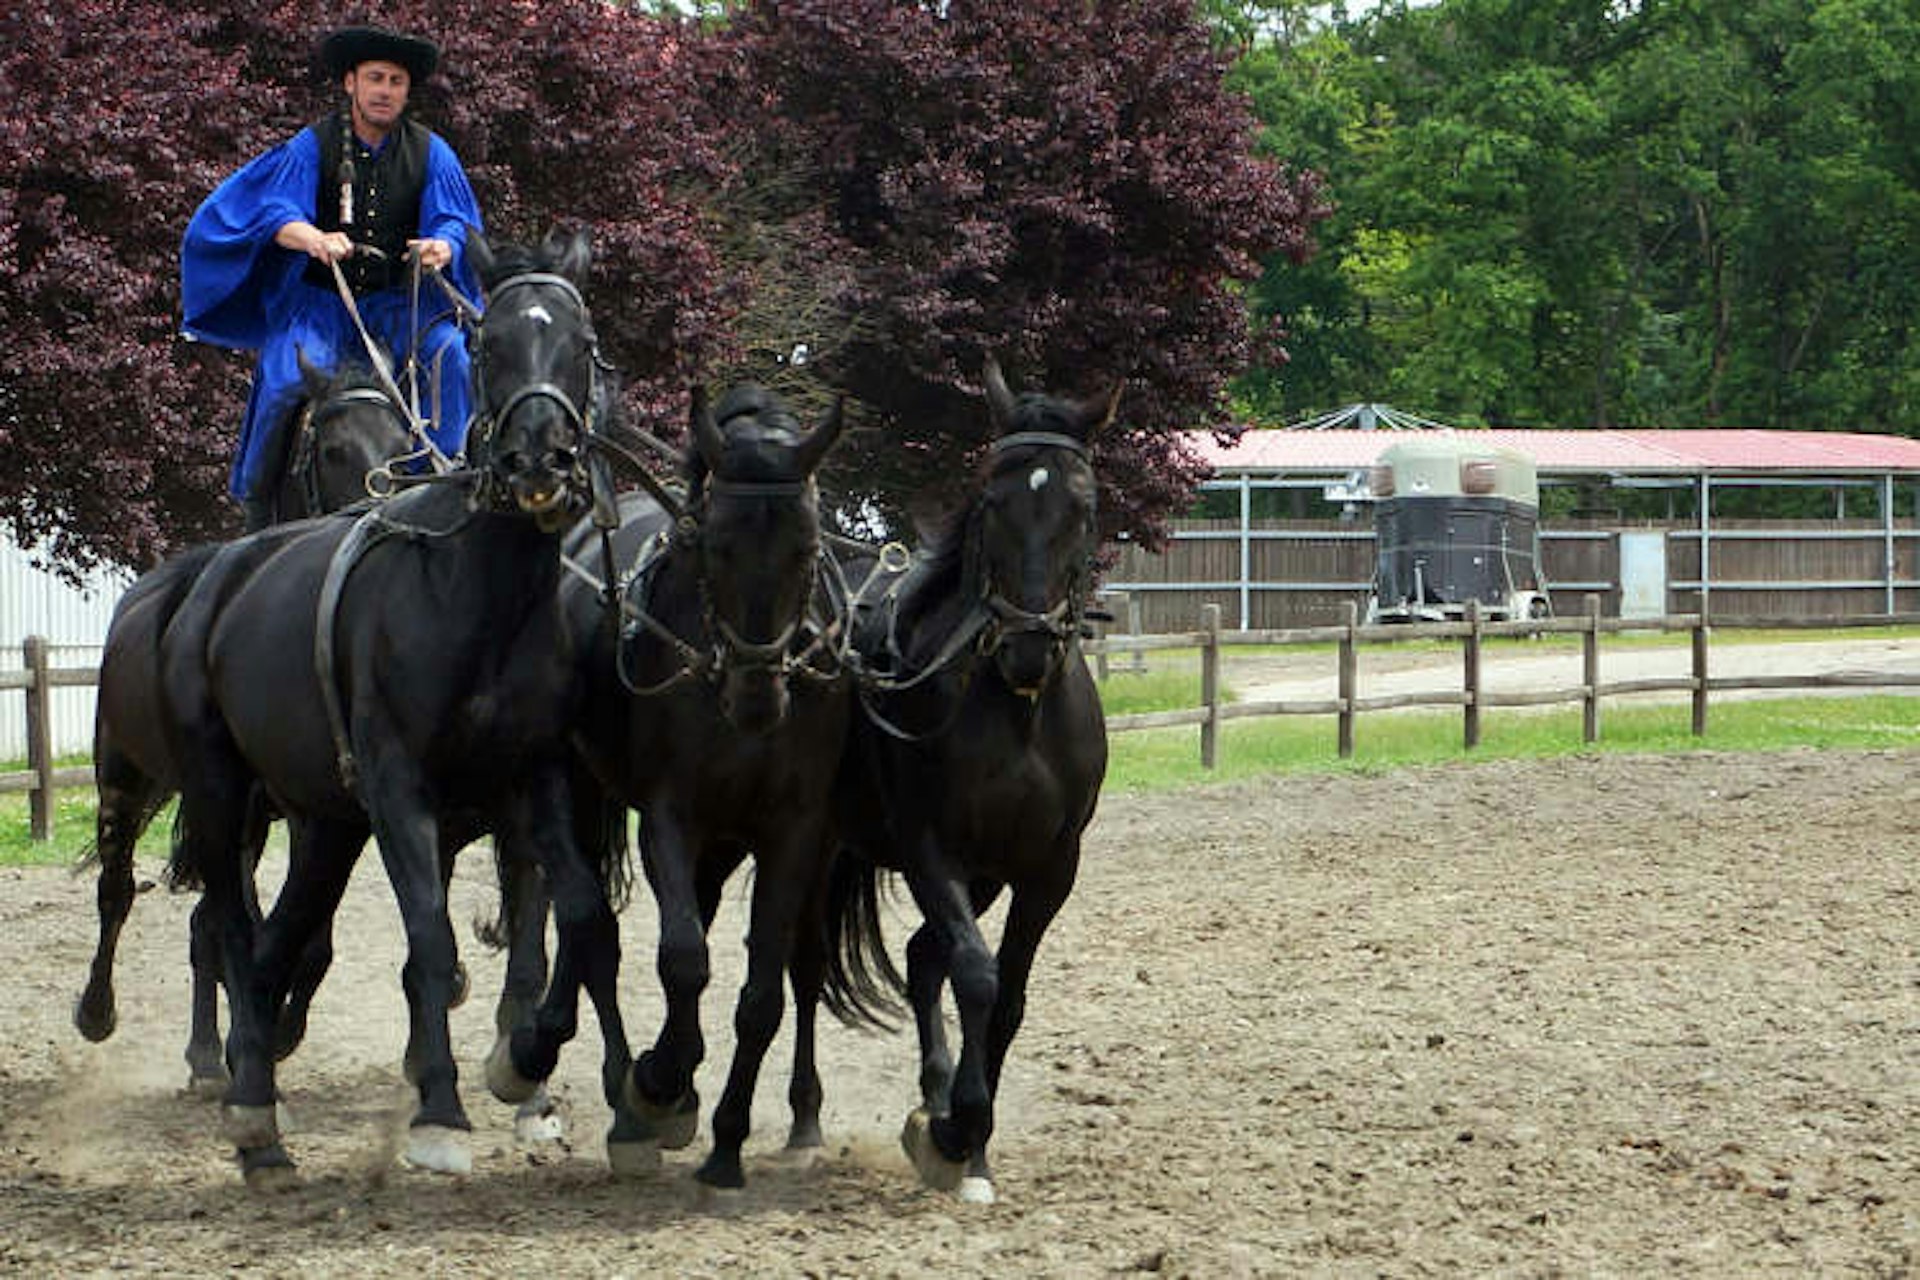 A display of Hortobágy horsemen's equestrian skills. Image by Anita Isalska / Lonely Planet